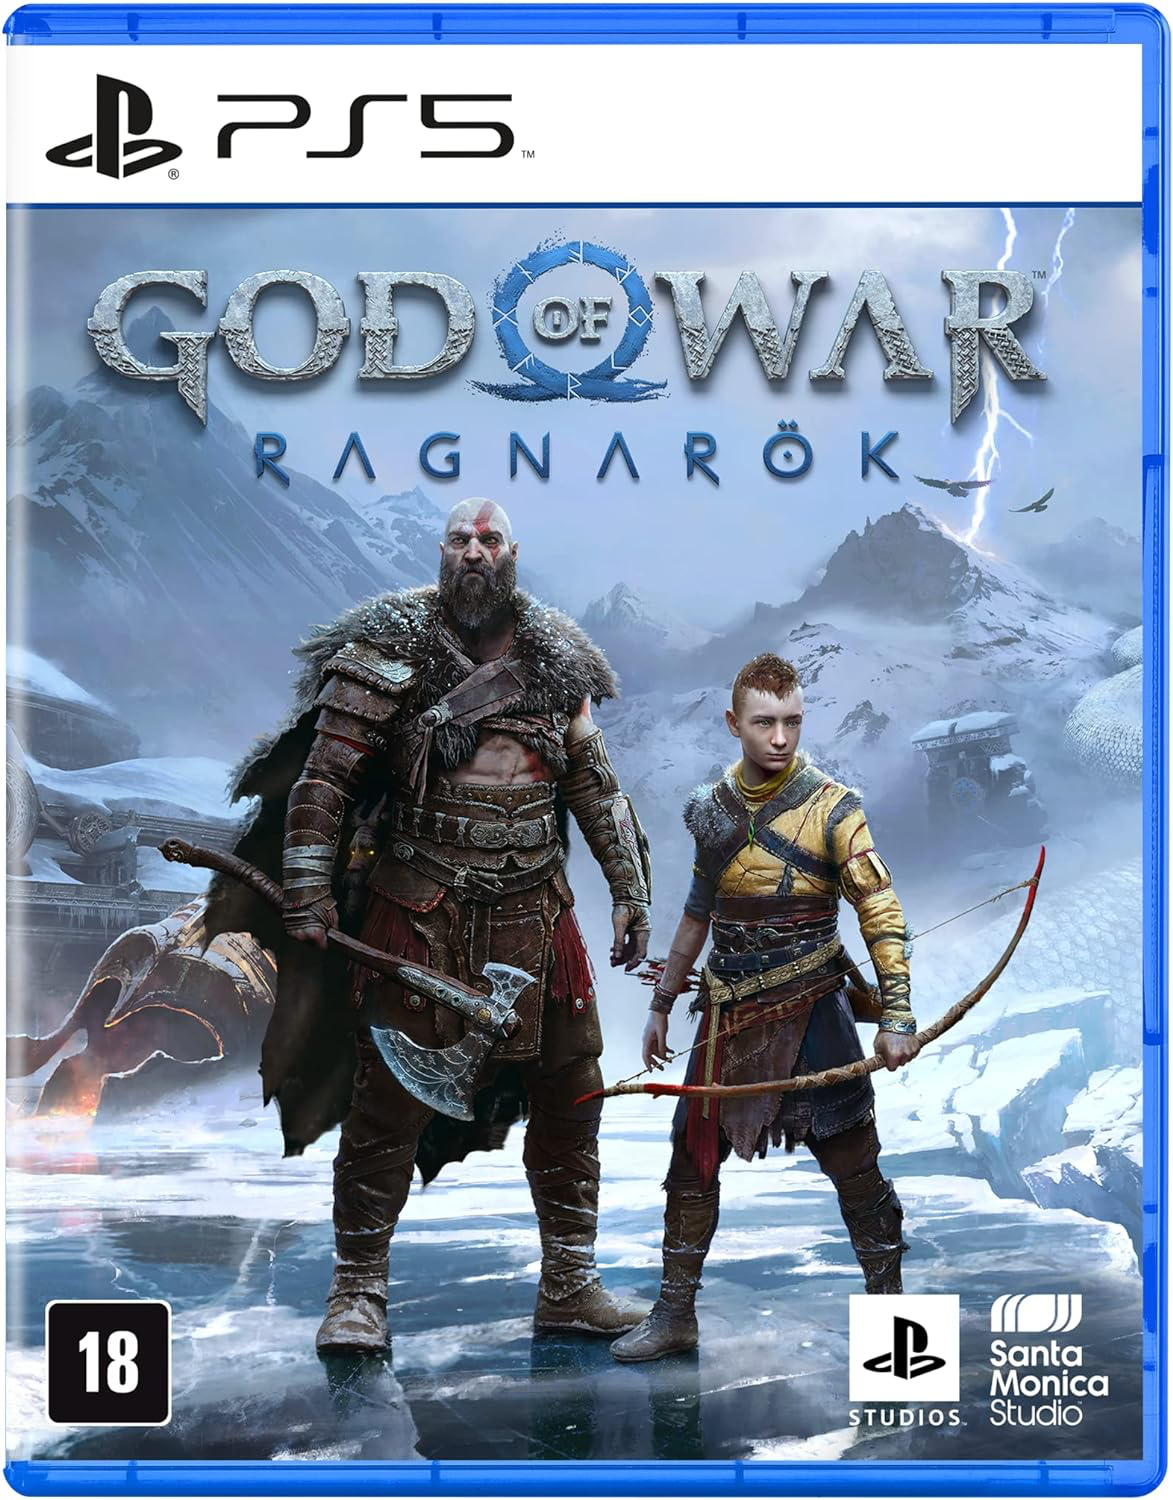  Jogo God of War Ragnarök, para PS5, está saindo 29% mais barato -  Giz Brasil